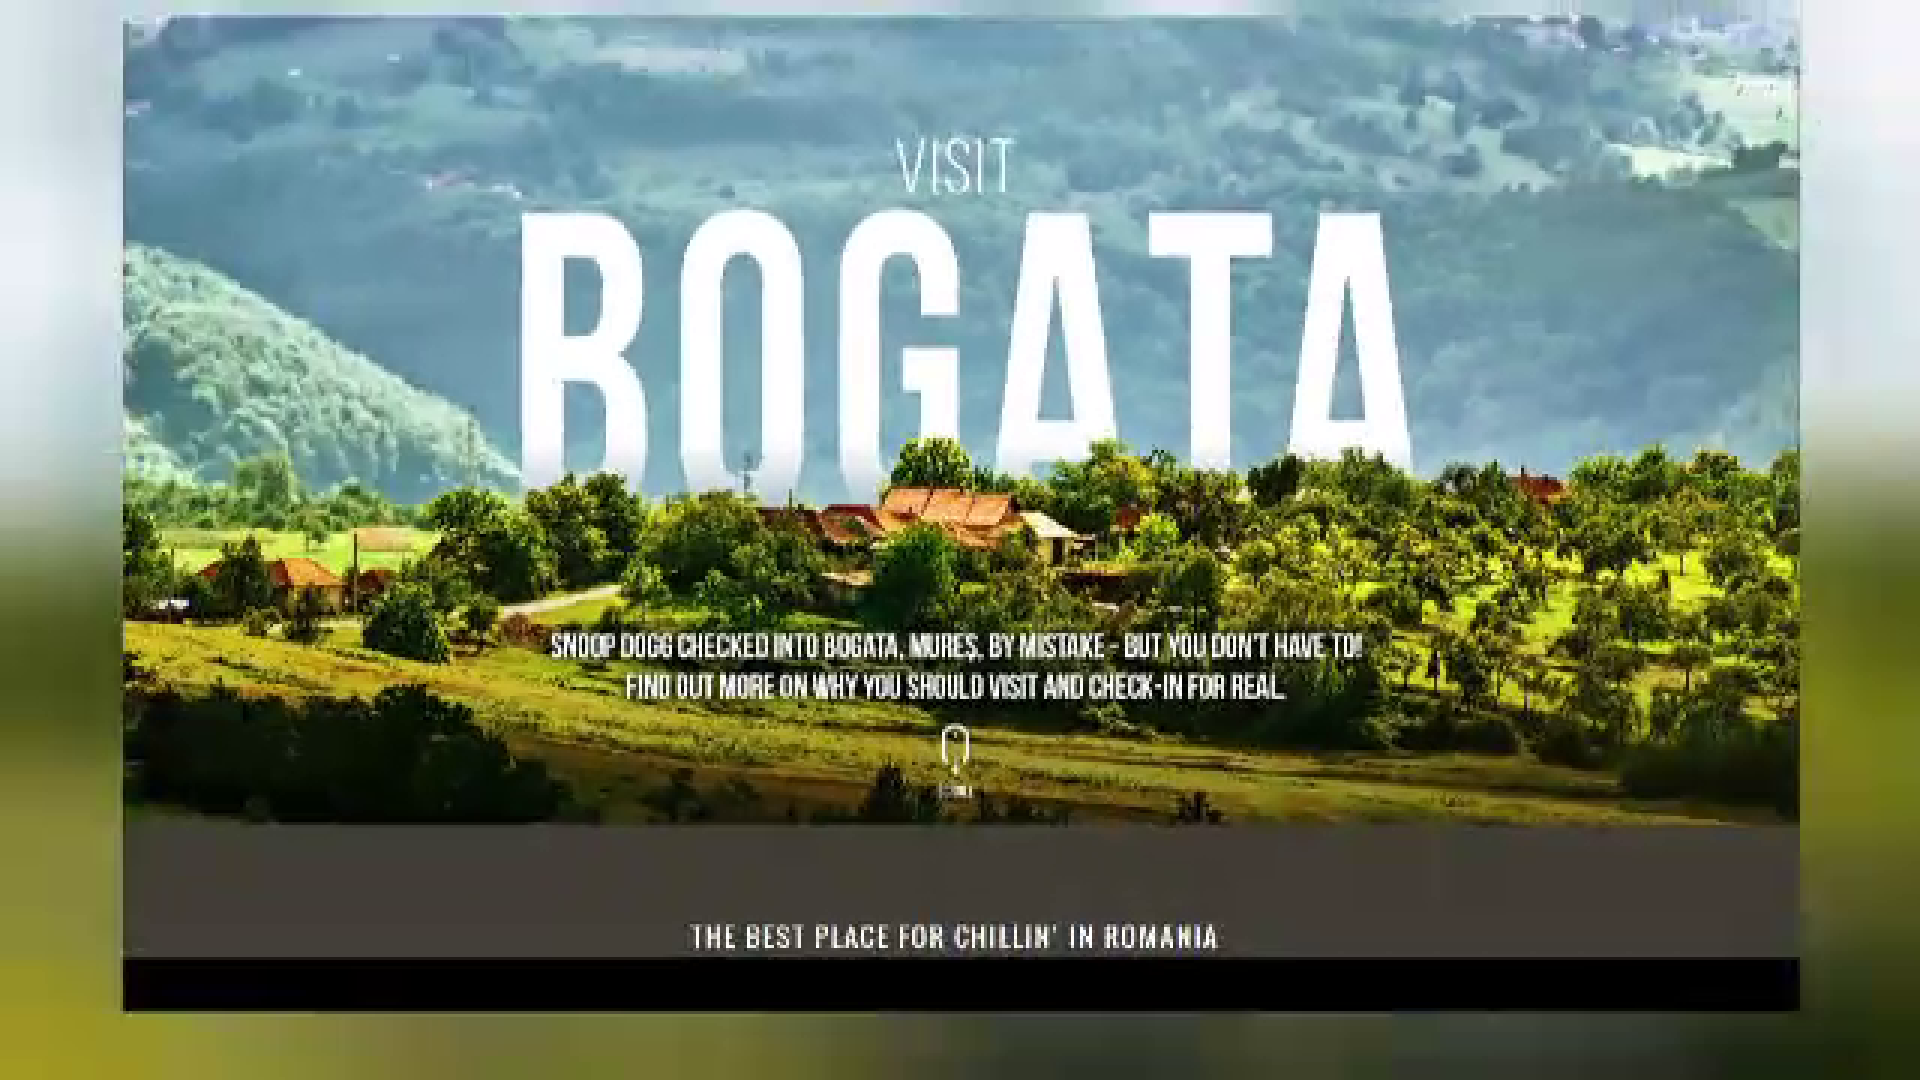 visitbogata.com